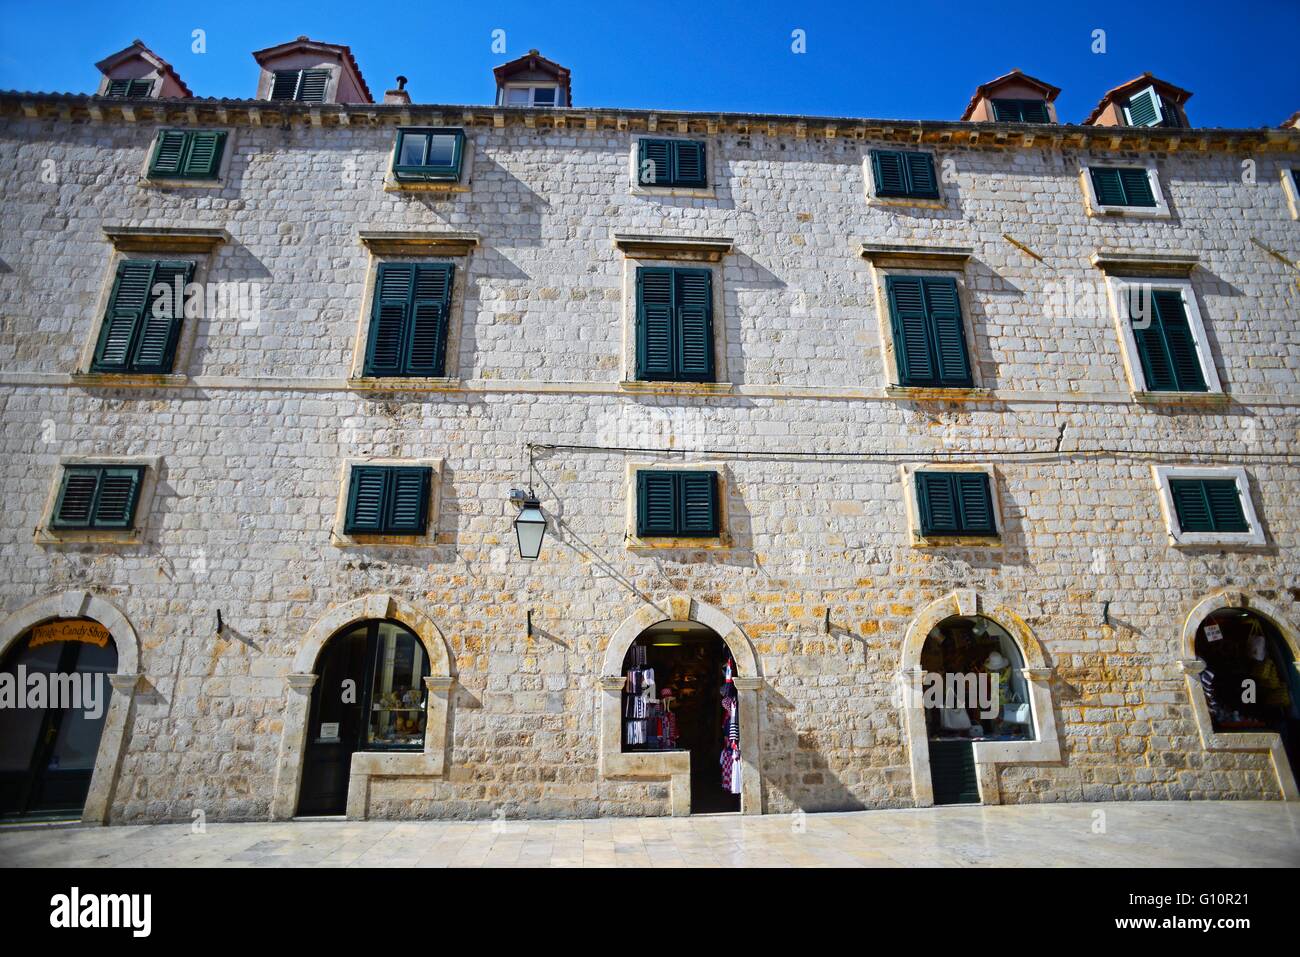 La rue principale stradun placa à Dubrovnik, Croatie Banque D'Images